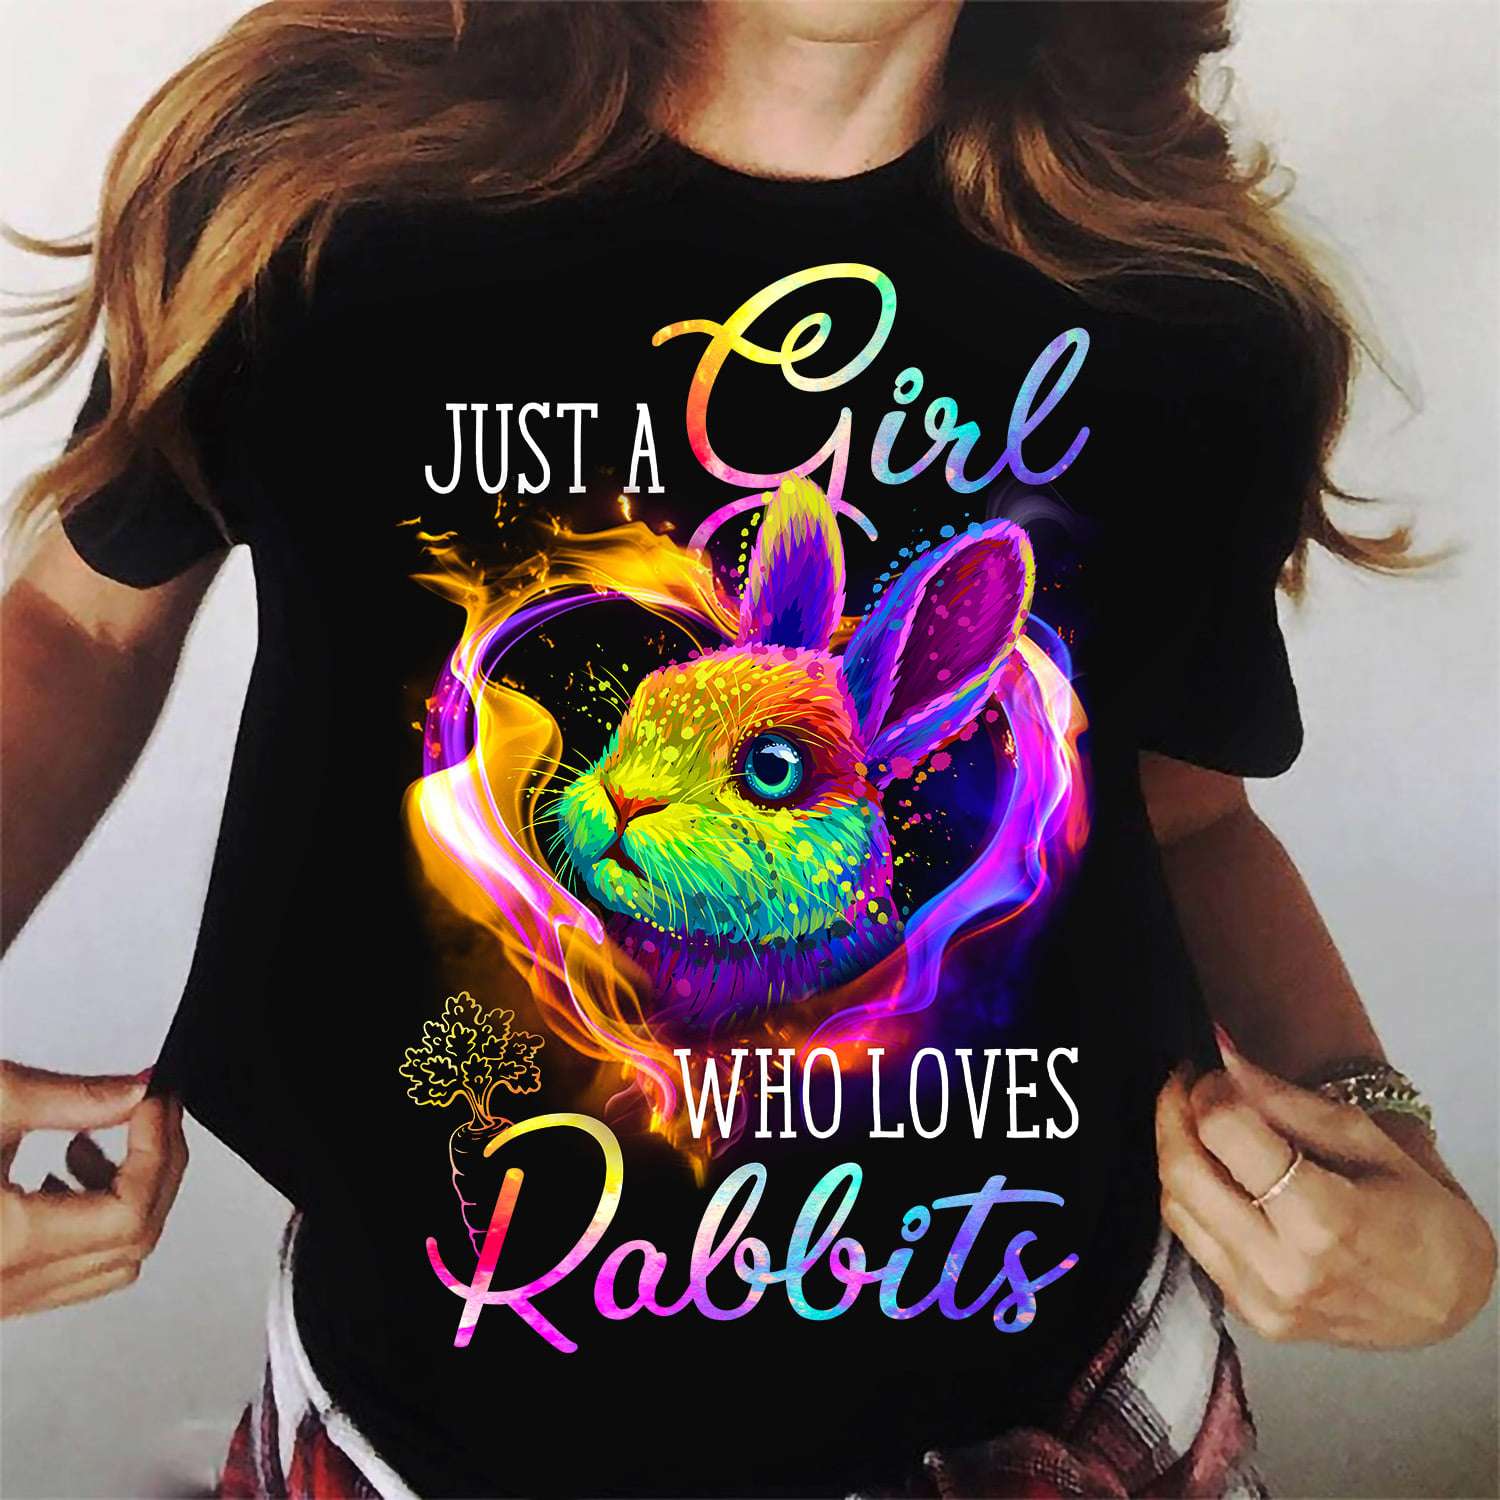 Just a girl who loves rabbits - Lgbt community, rabbit girl